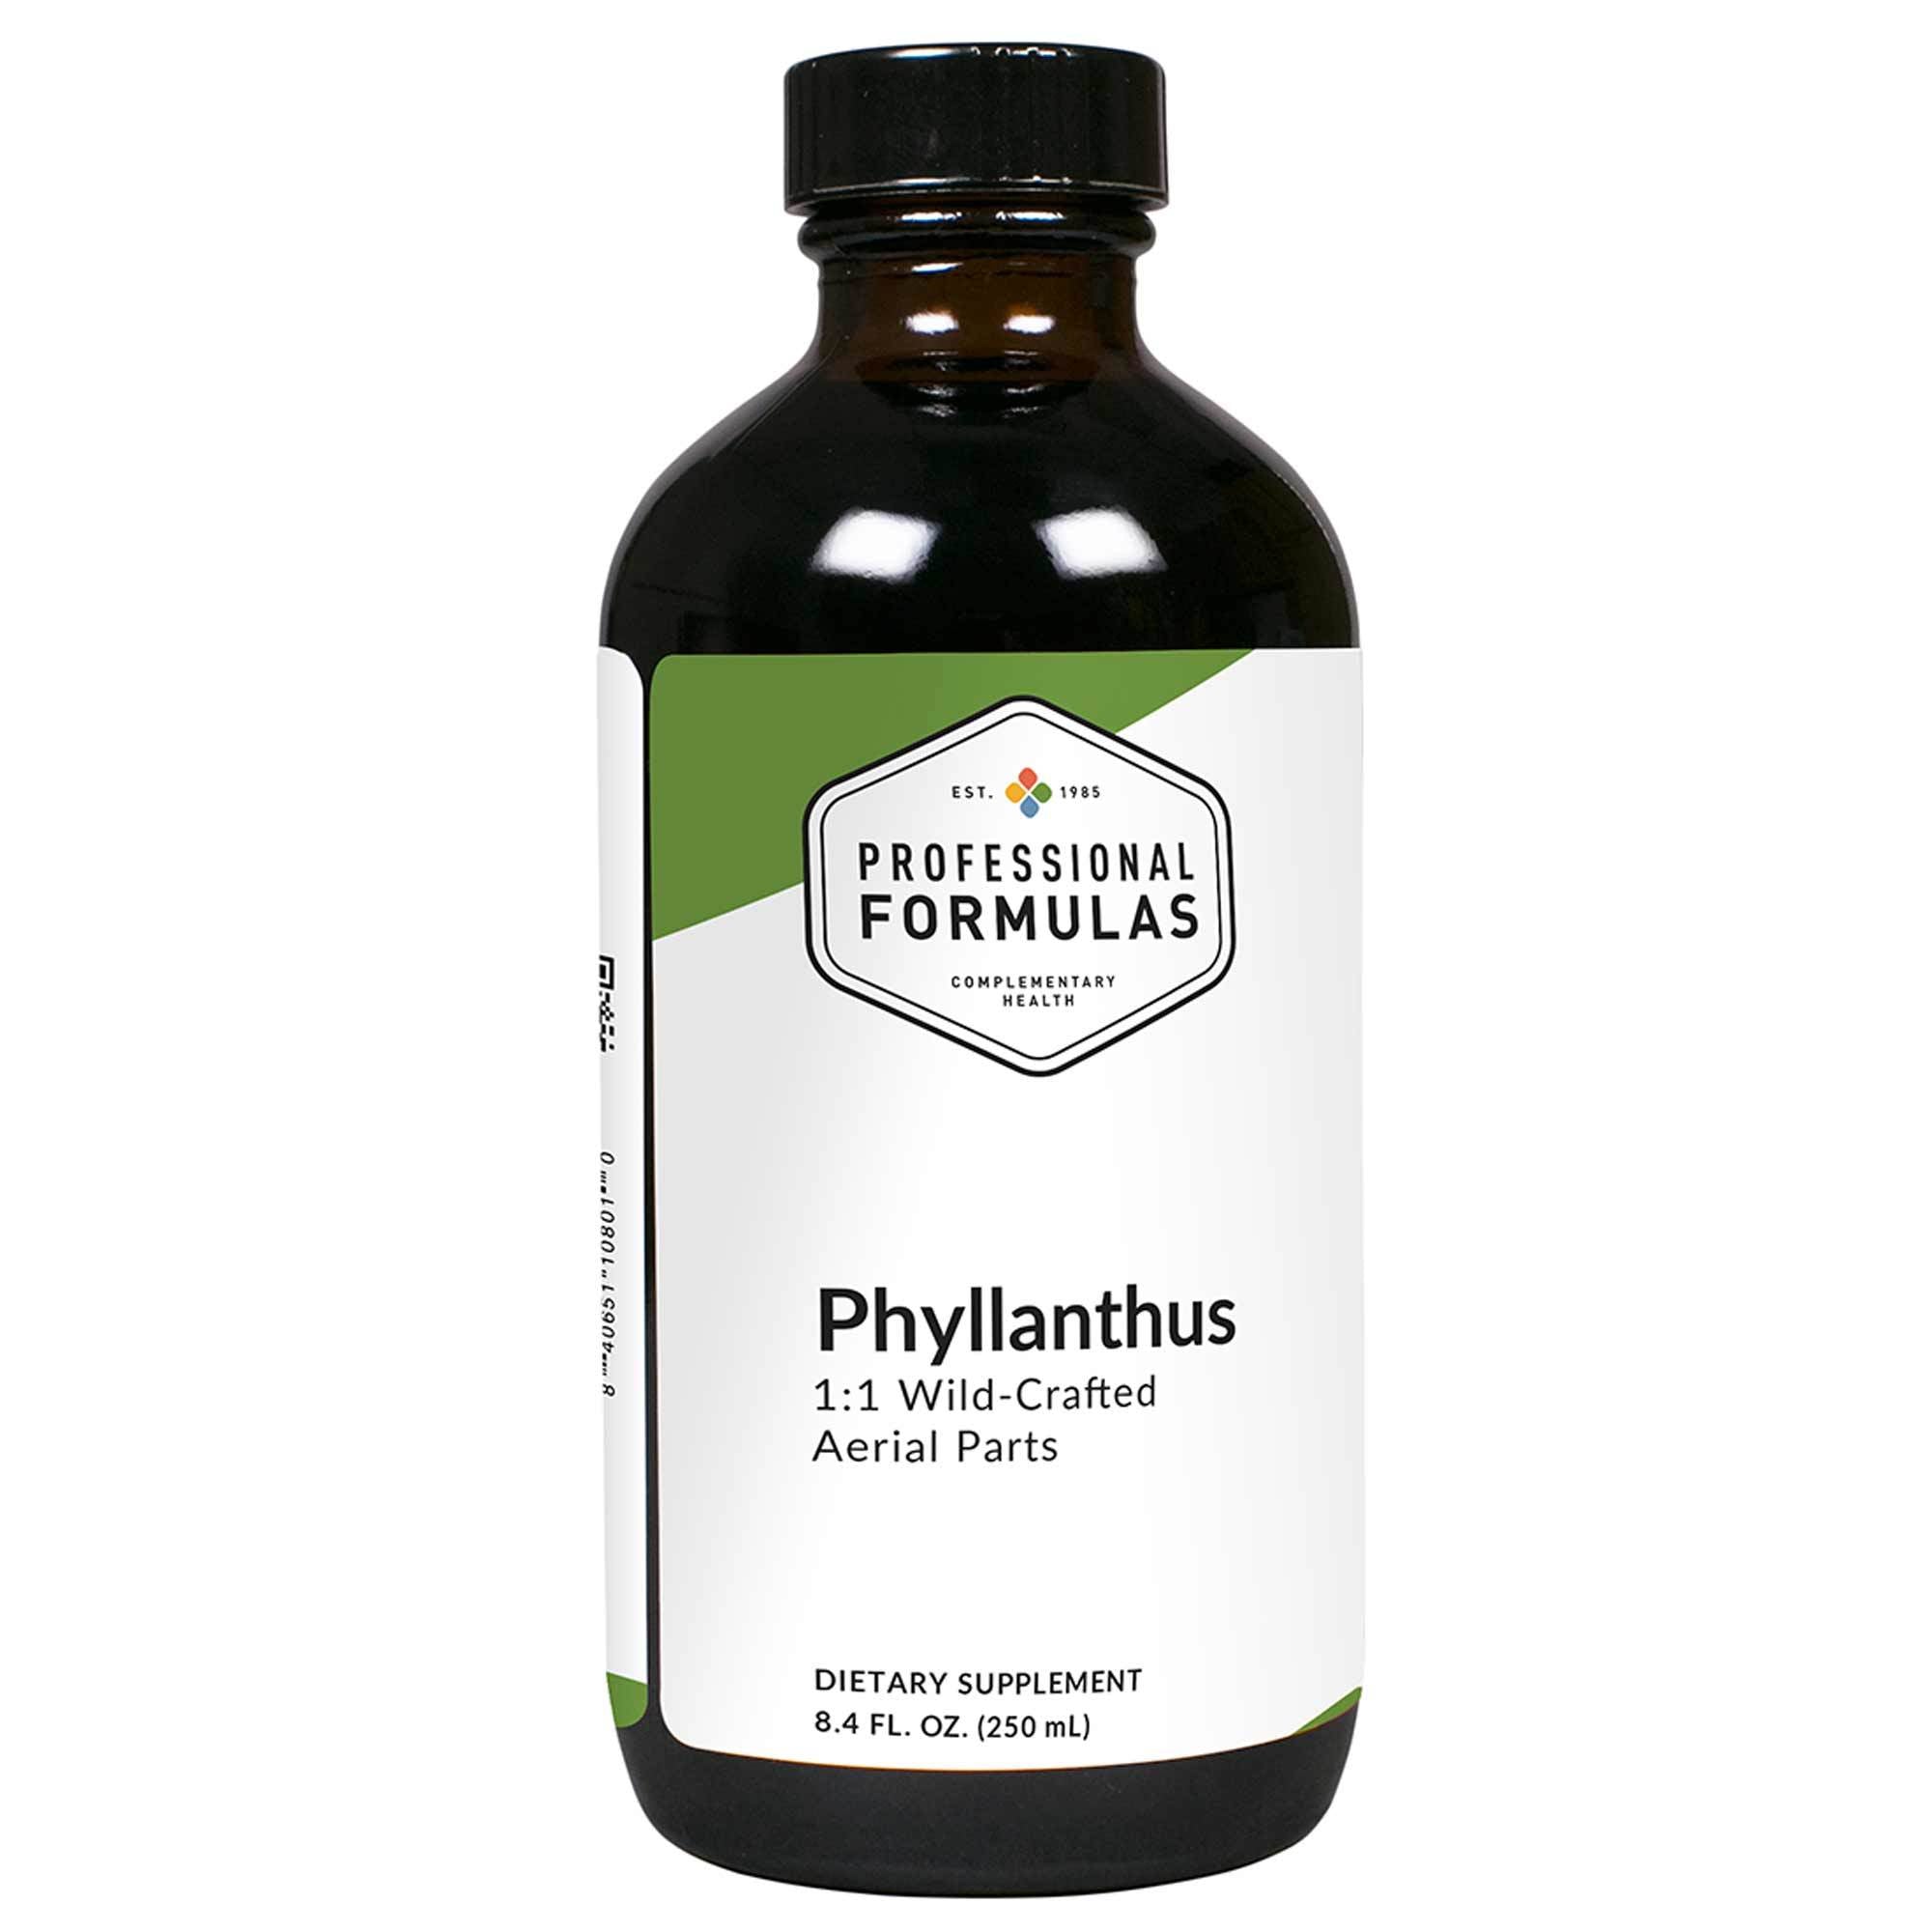 Professional Formulas - Phyllanthus amarus - 8.4 FL. OZ. (250 mL)